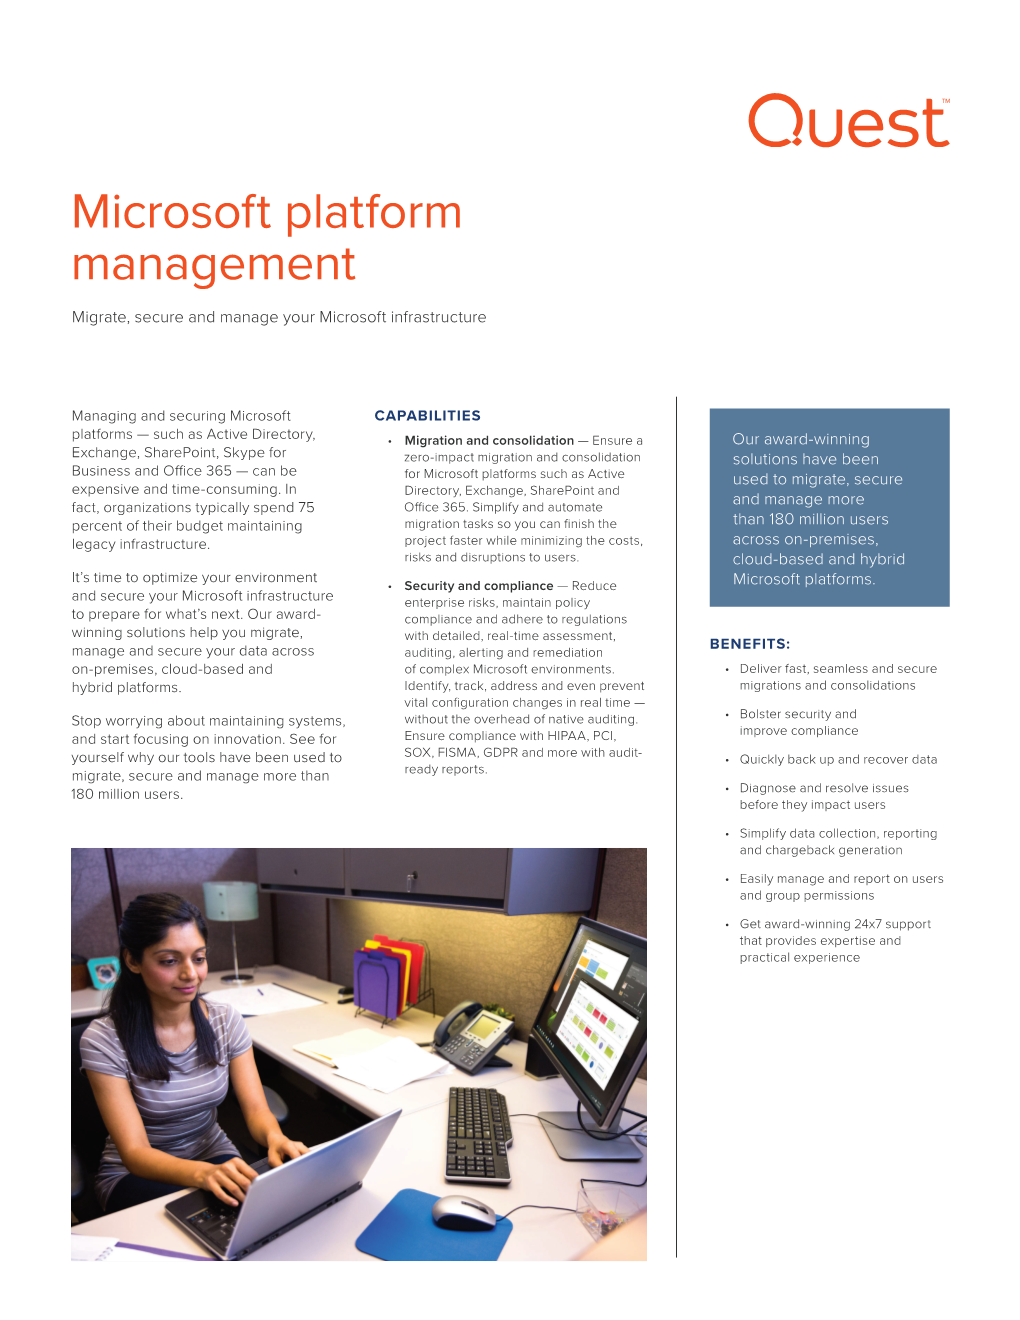 Quest: Microsoft Platform Management |Manage And